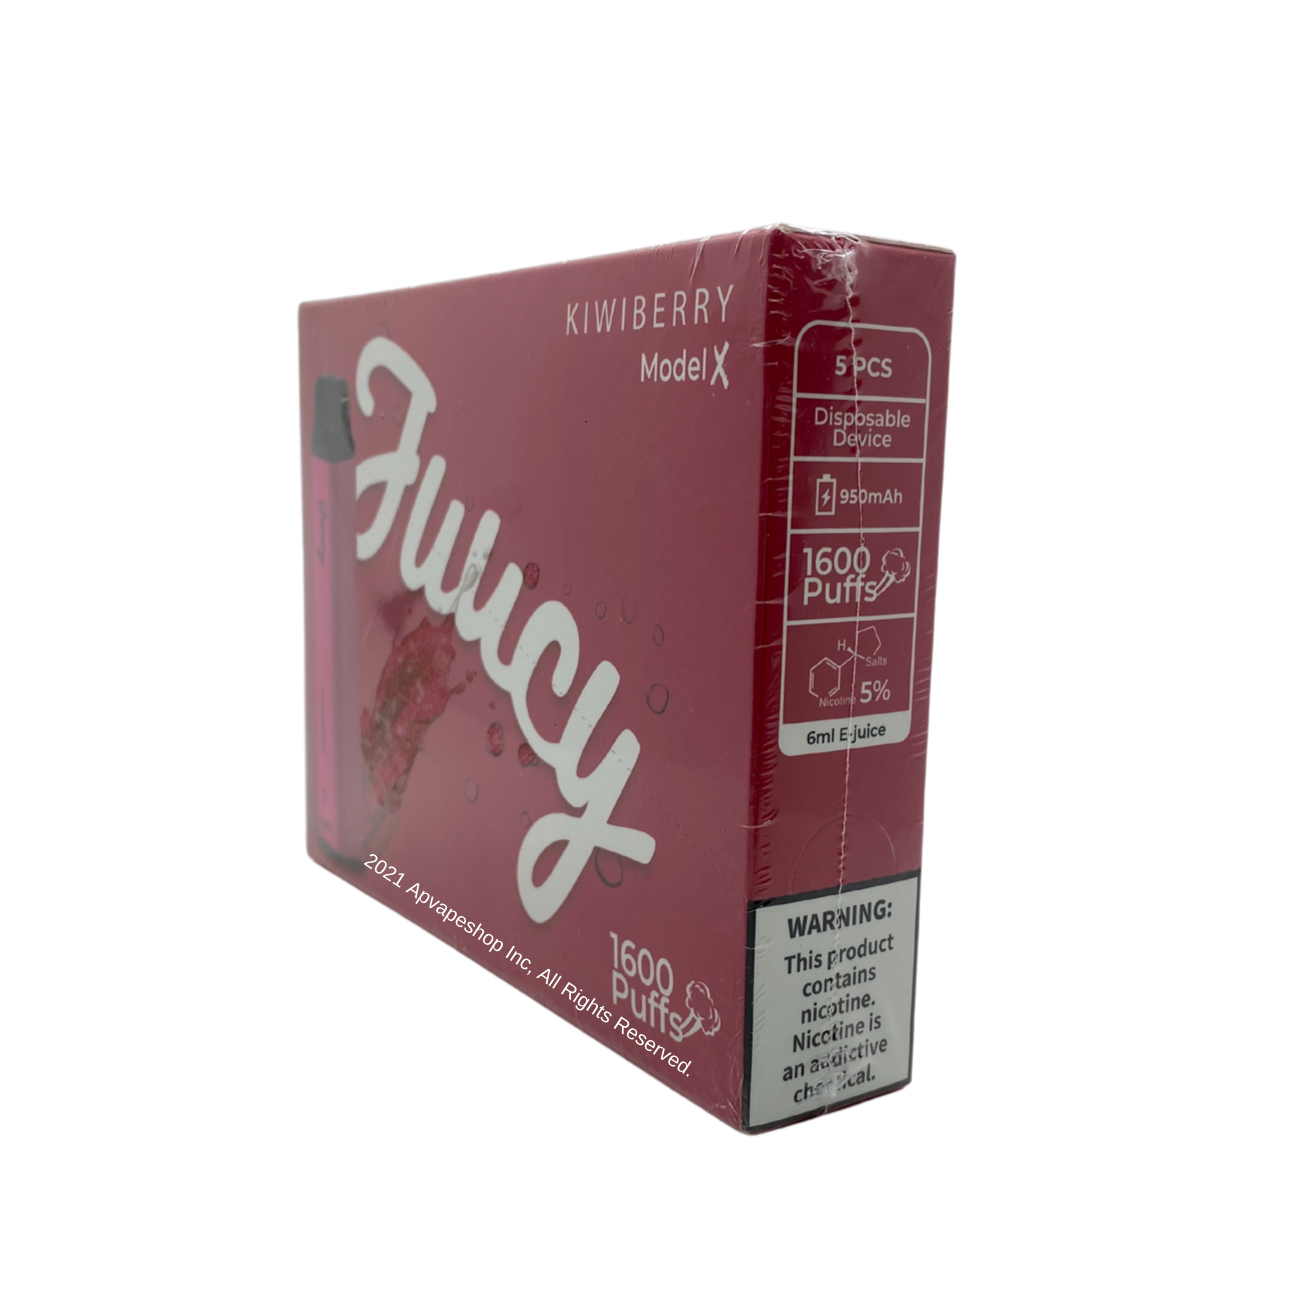 JUUCY Model X 1600 Puffs Disposable Vape Kiwi Berry